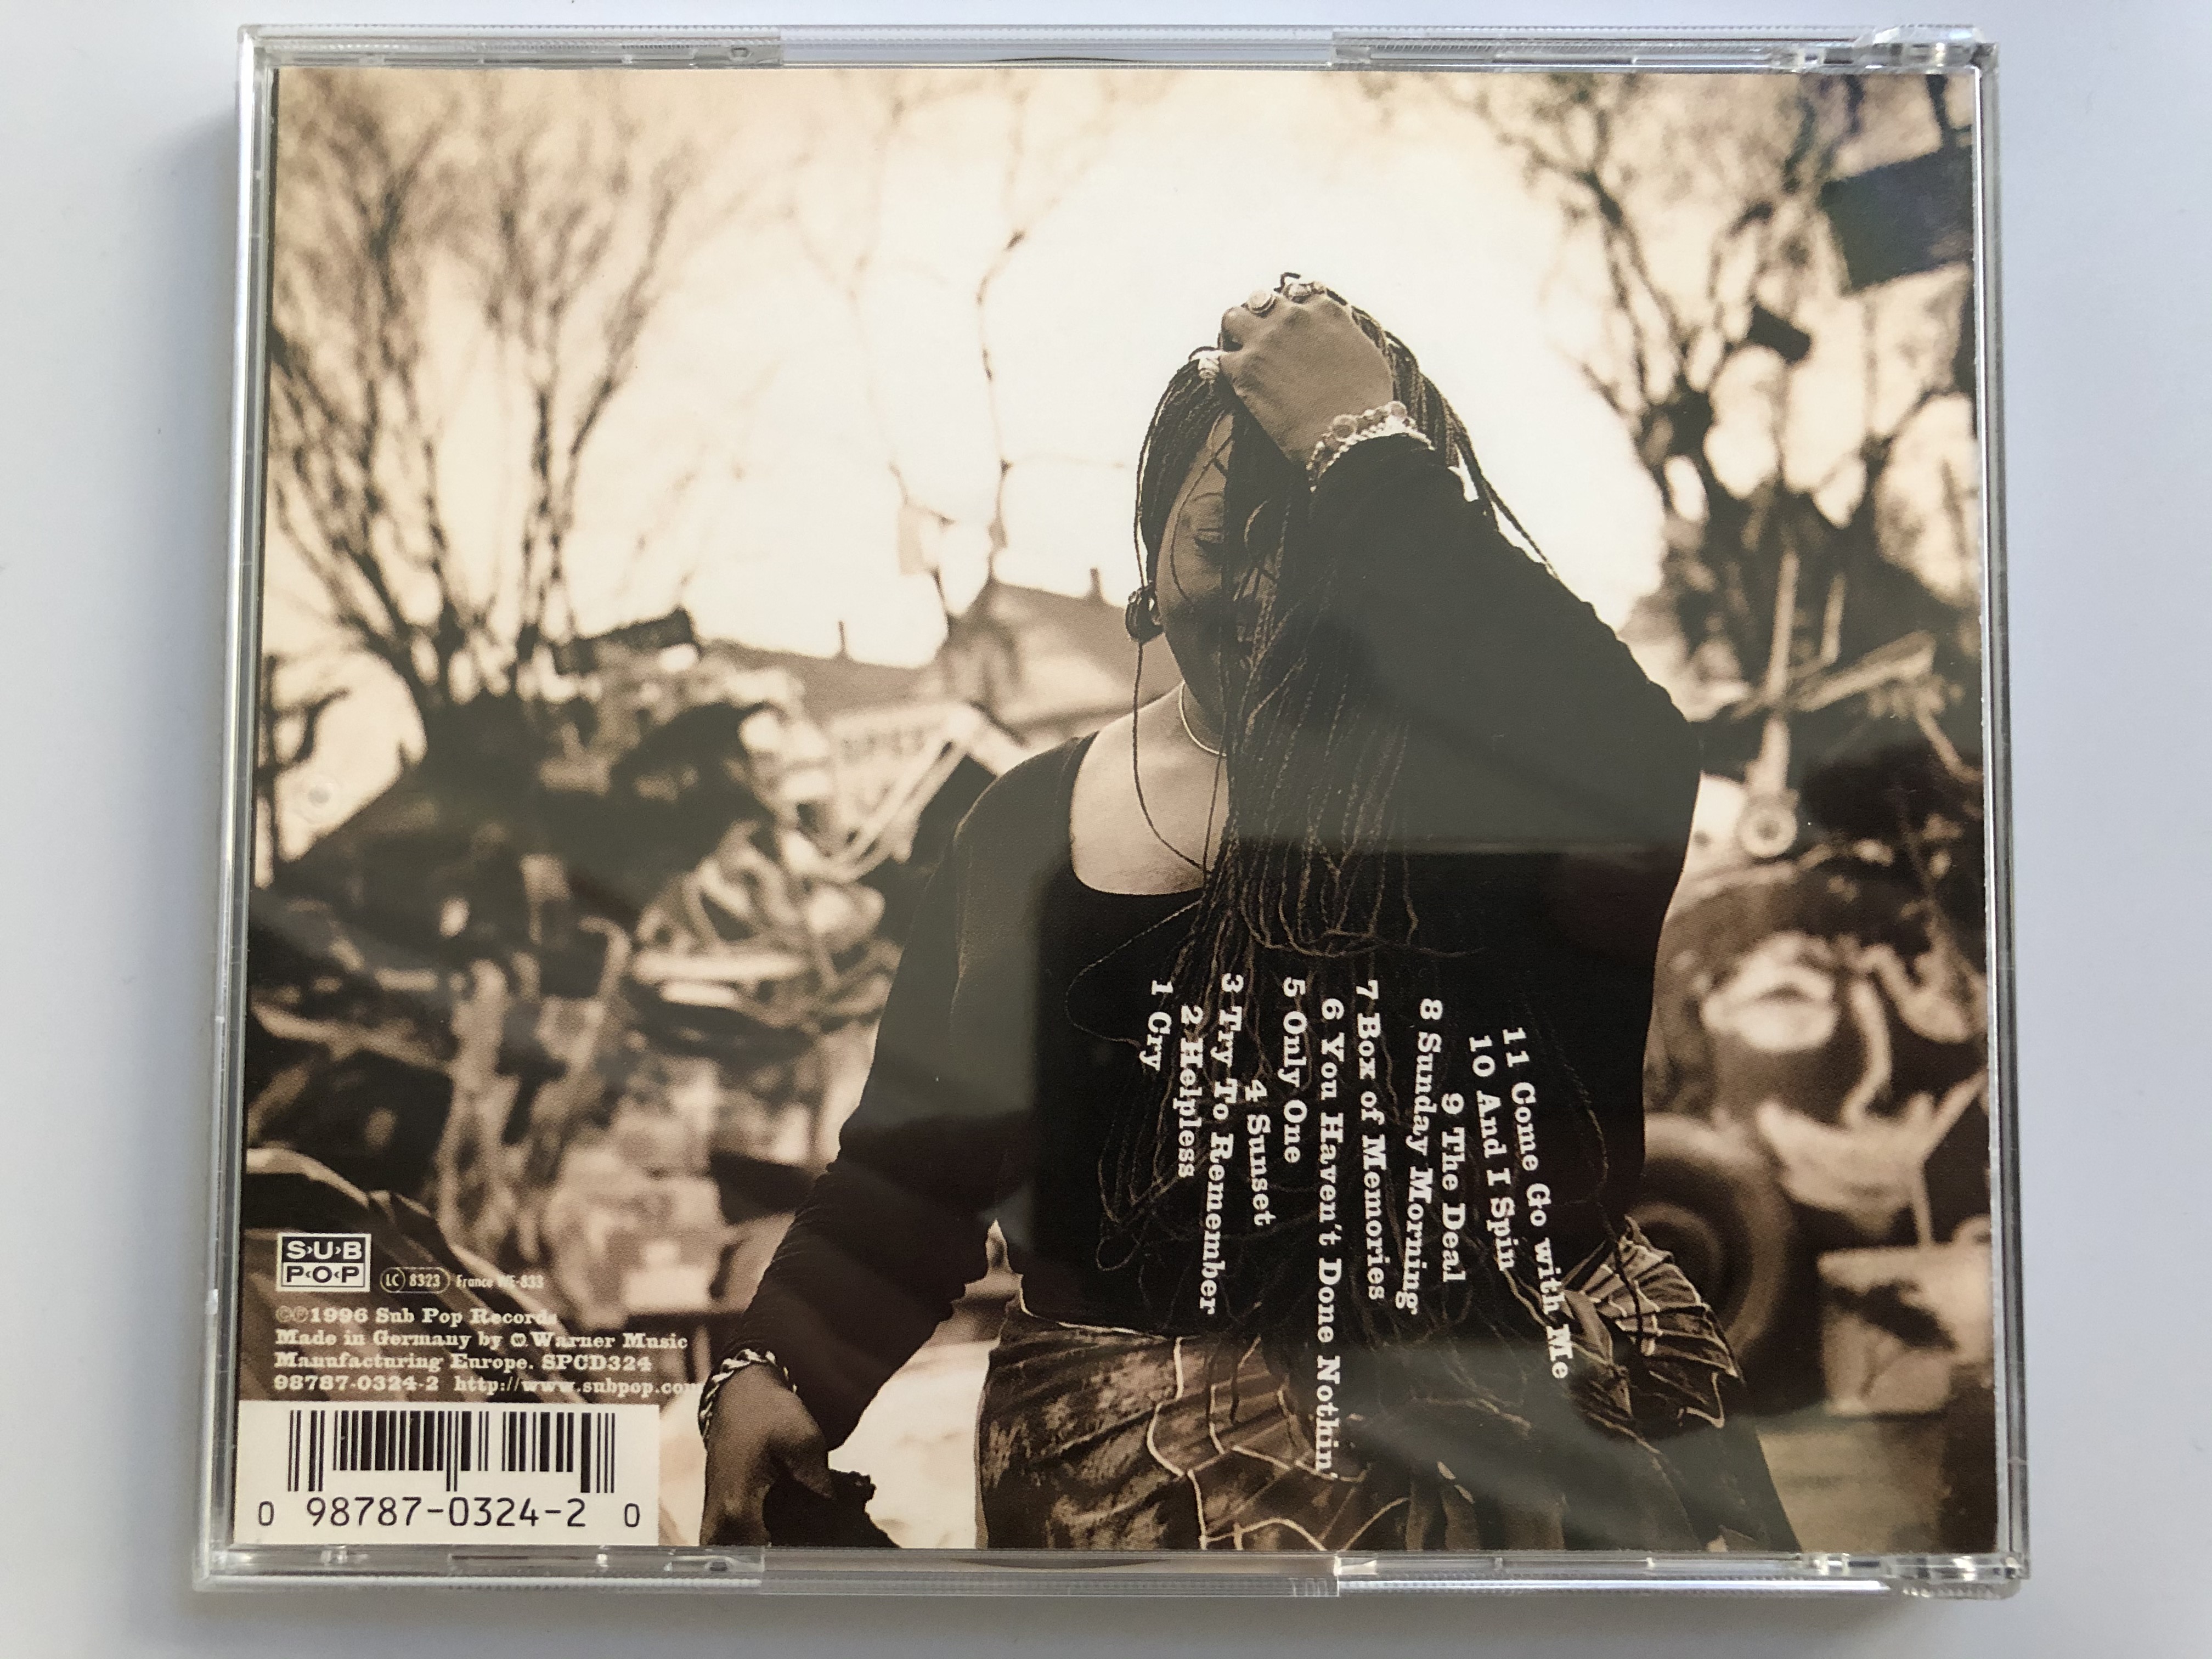 thornetta-davis-sunday-morning-music-sub-pop-audio-cd-1996-spcd-324-6-.jpg